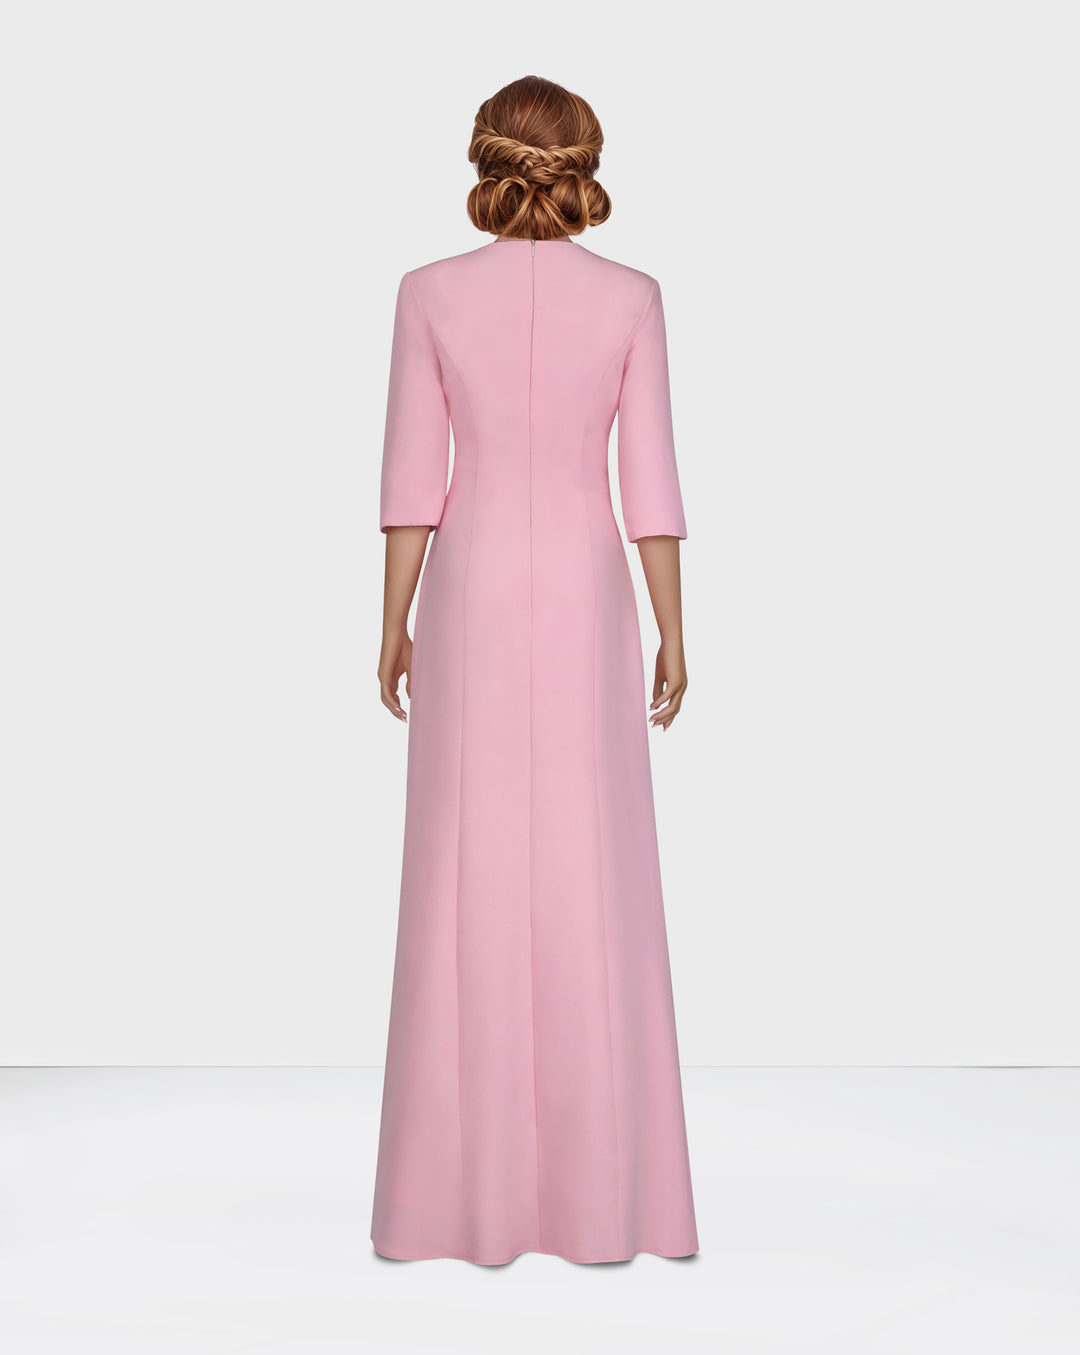 Sequinned neckline - long floor length pink dress